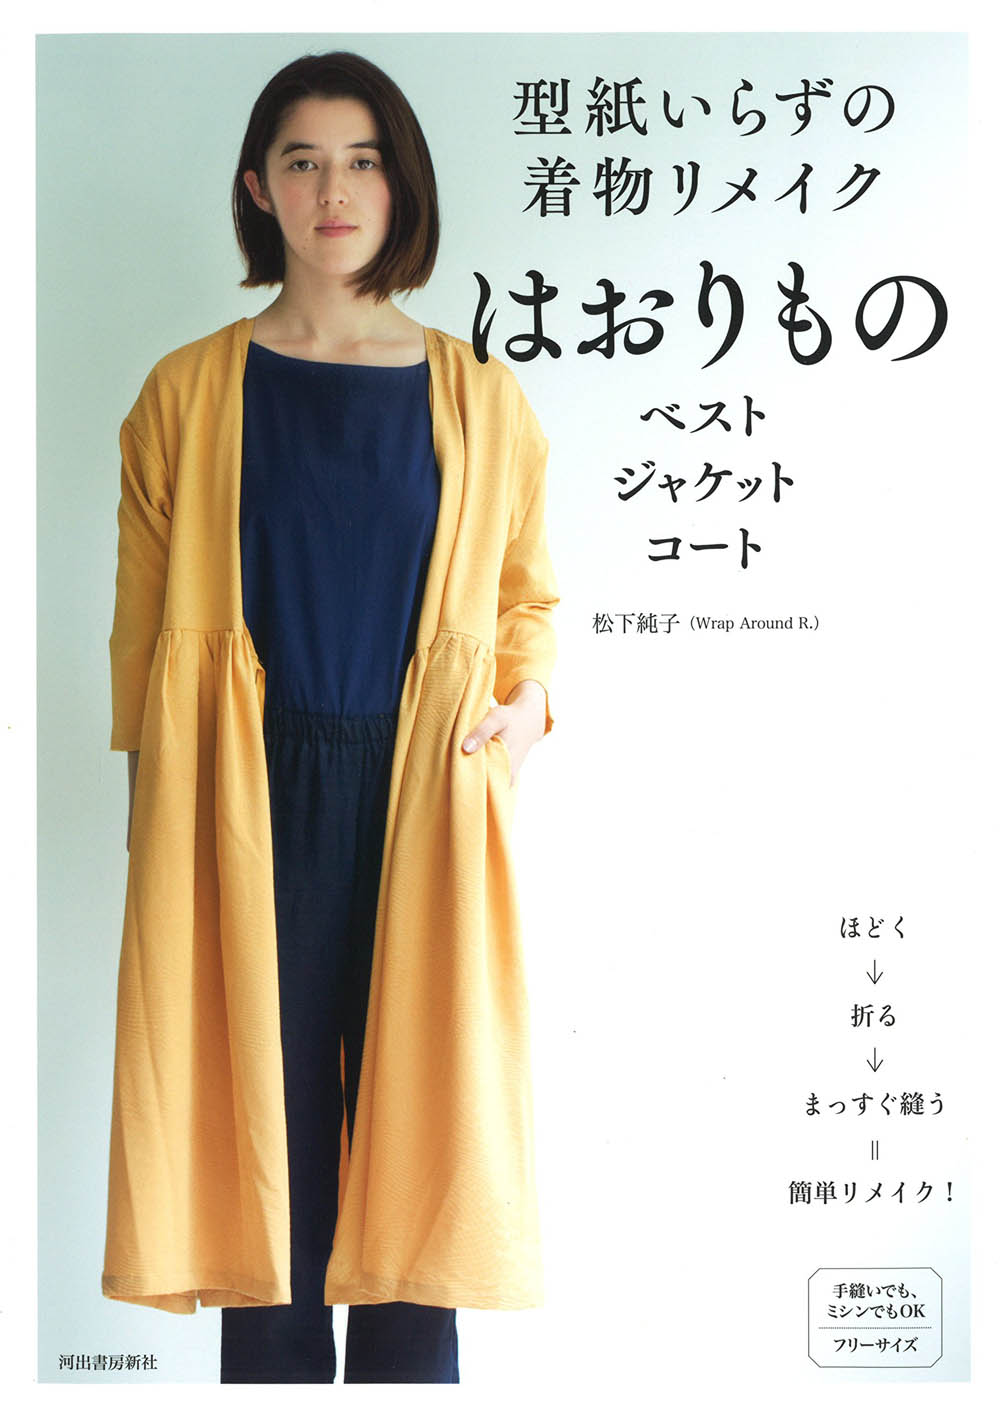 Kimono remake textile: Best Jacket Coat book